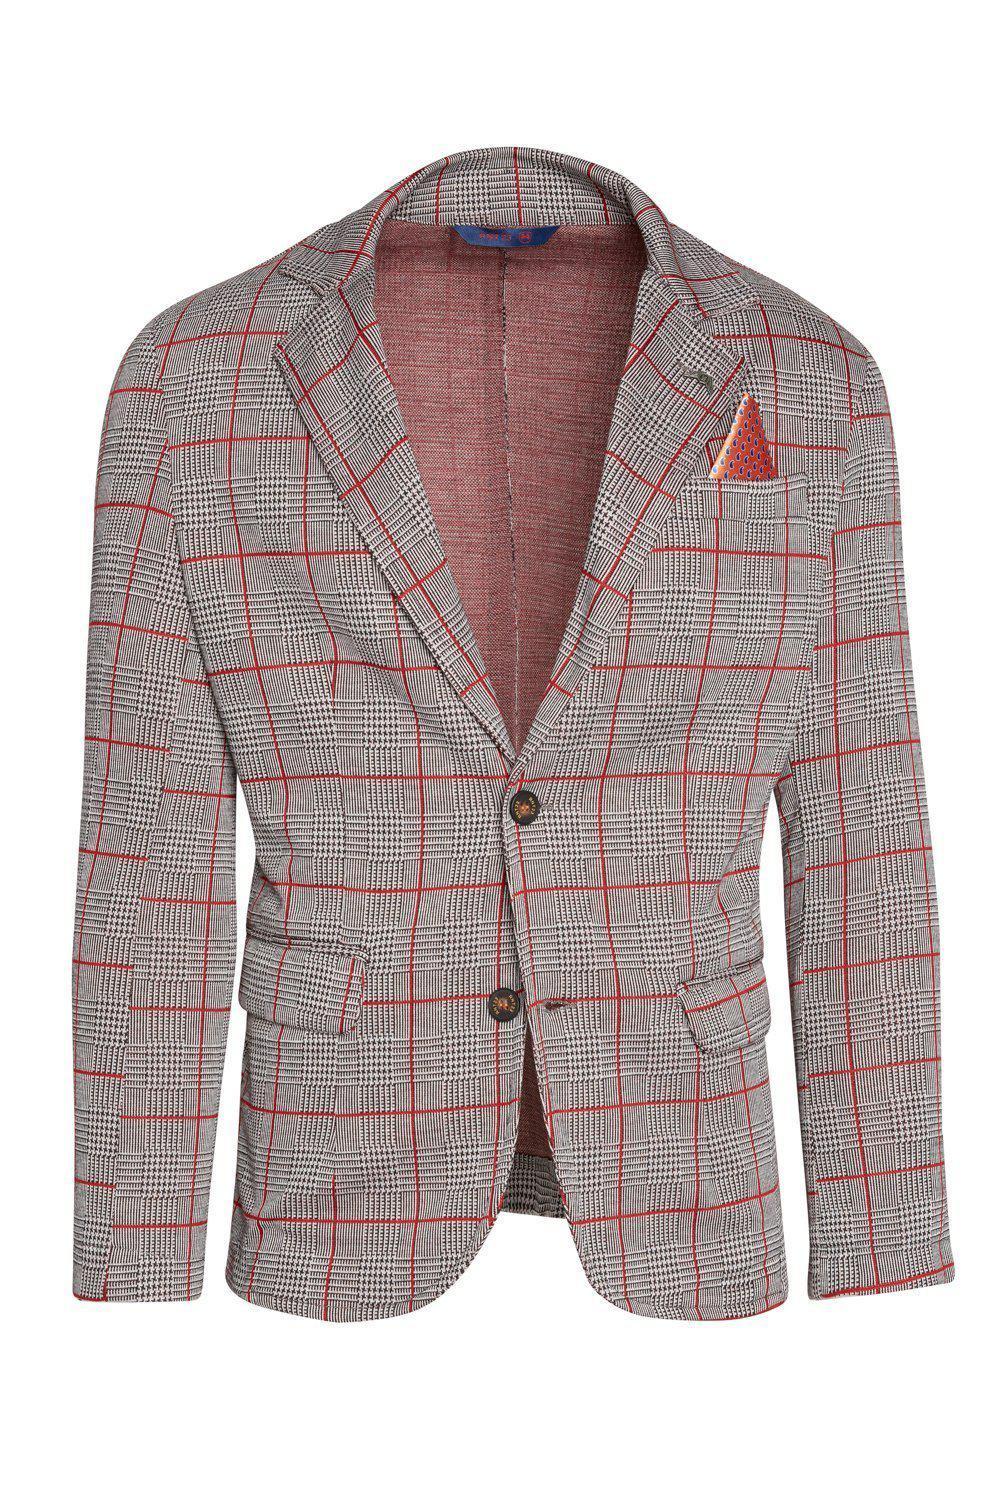 Men's lightweight fitted casual blazer in grey.